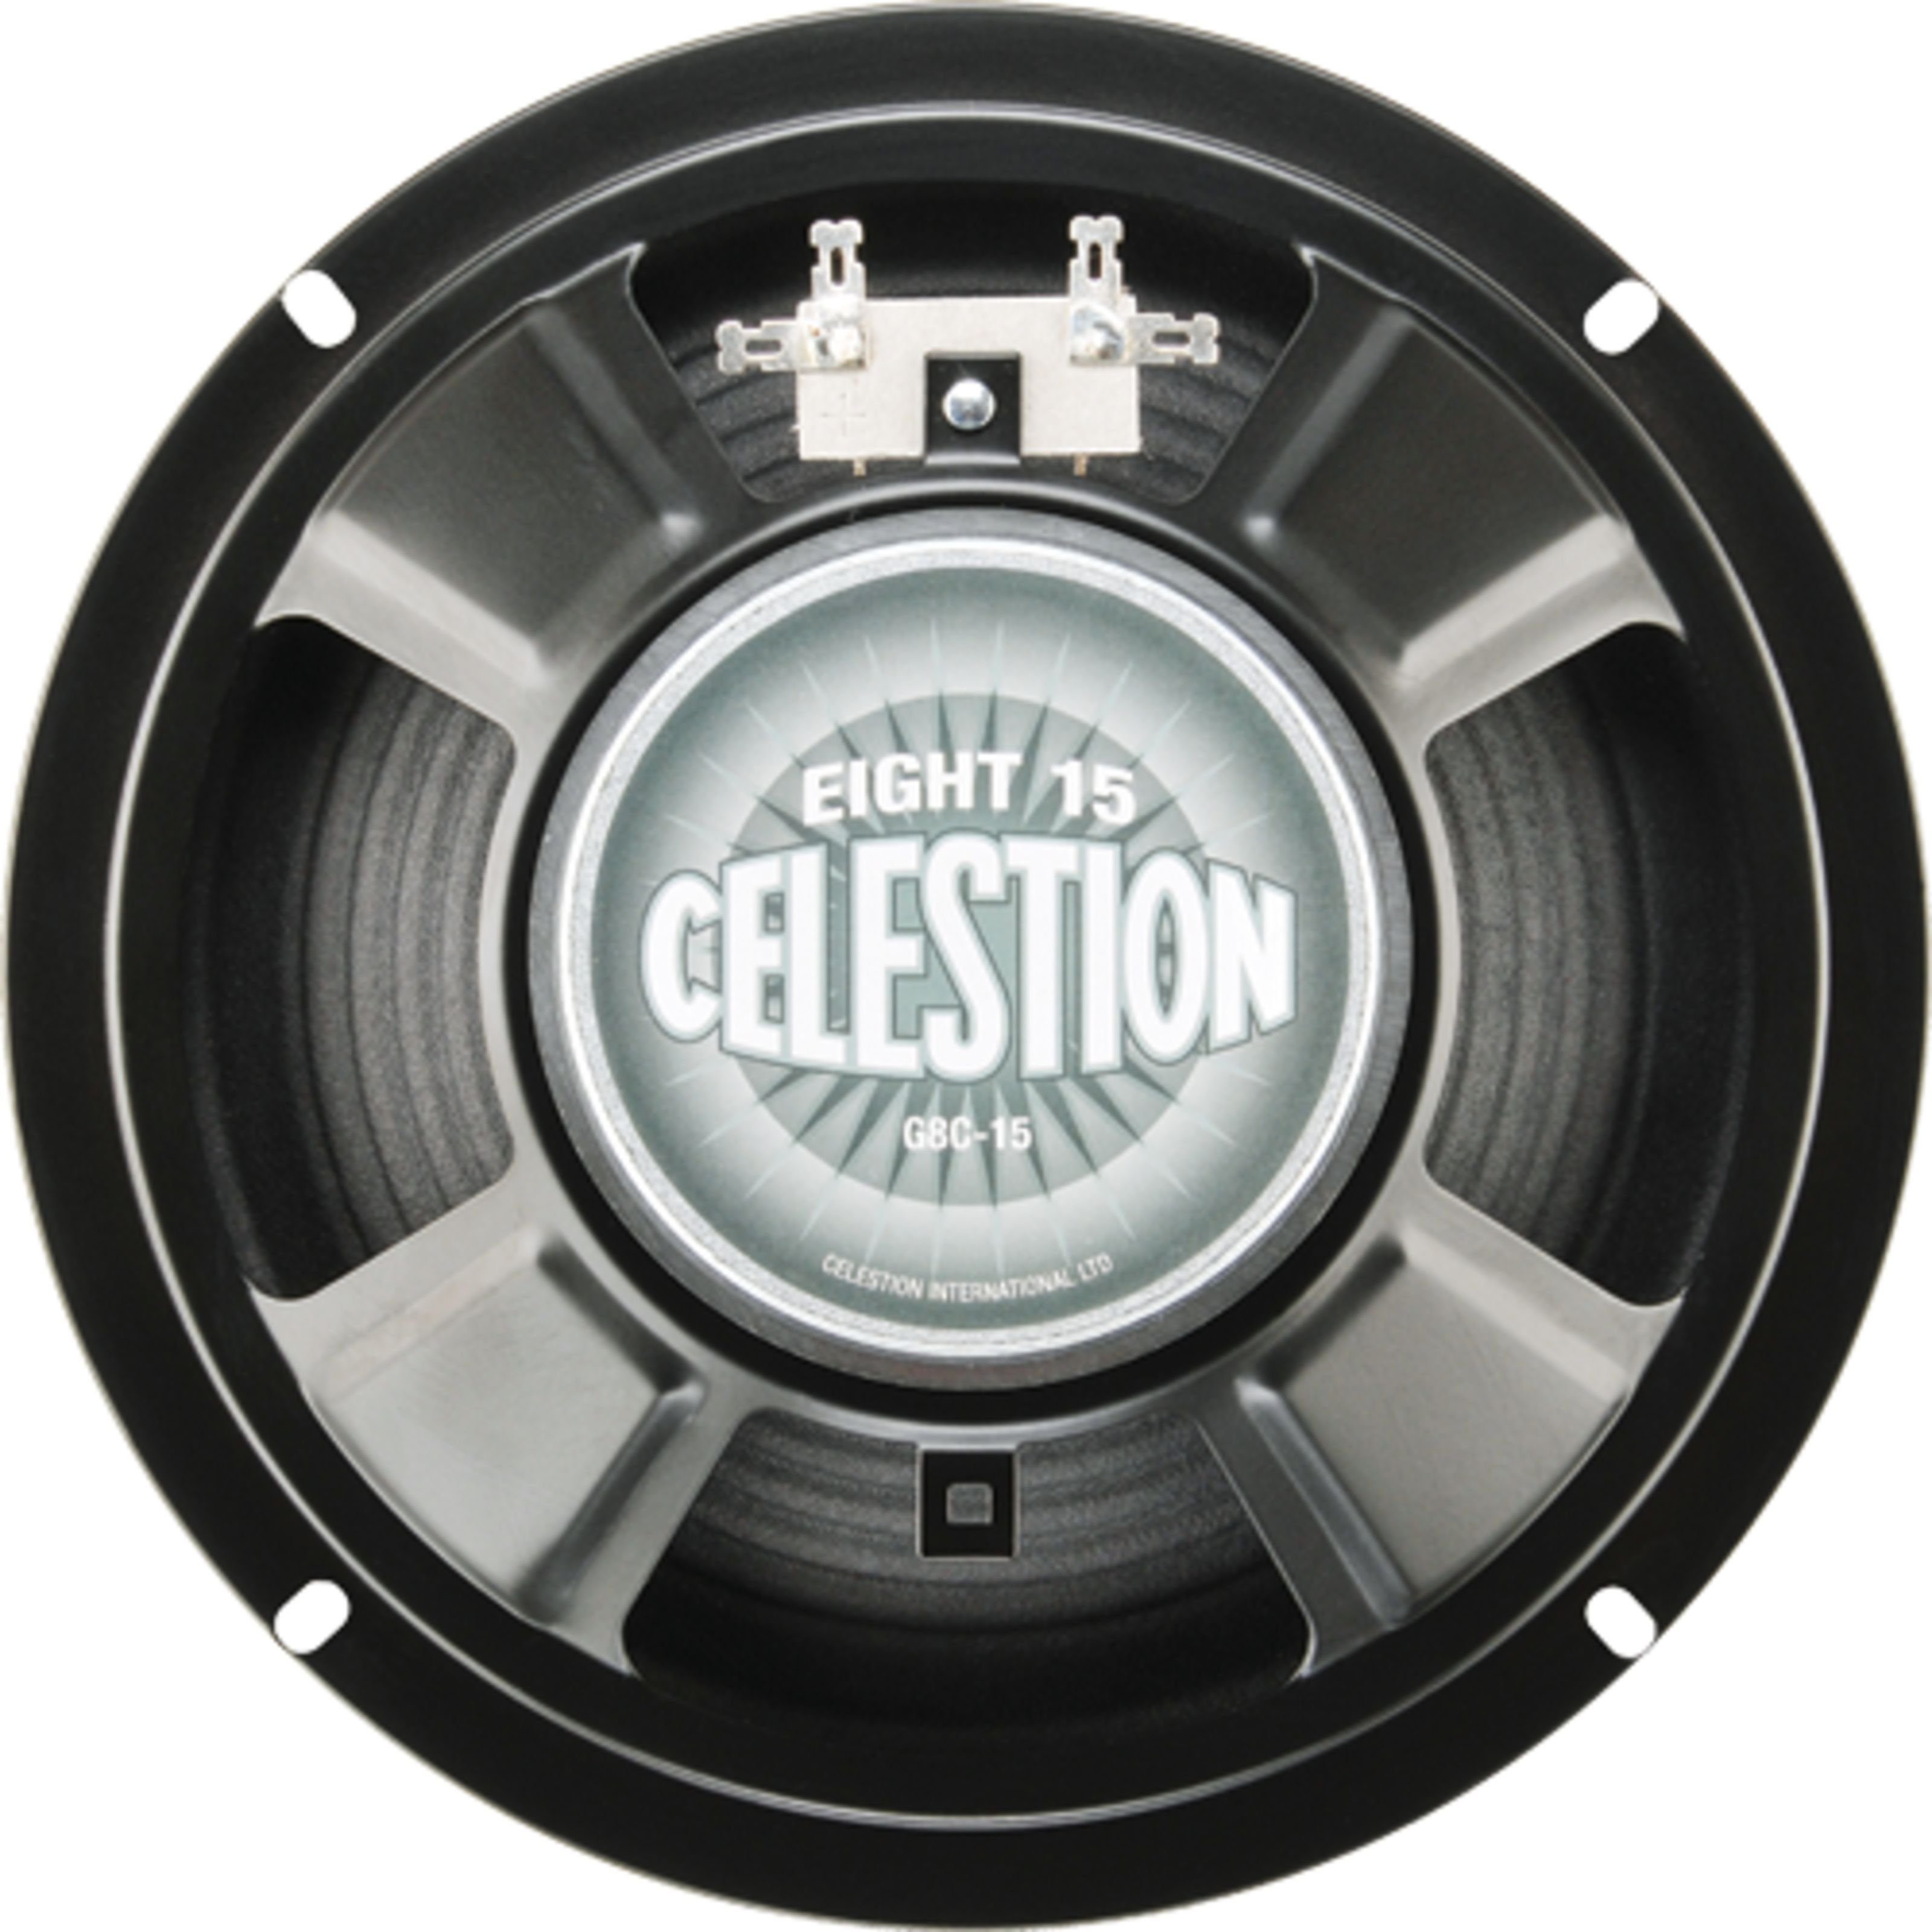 Celestion Verstärker (Eight 15 8" 8 Ohm)